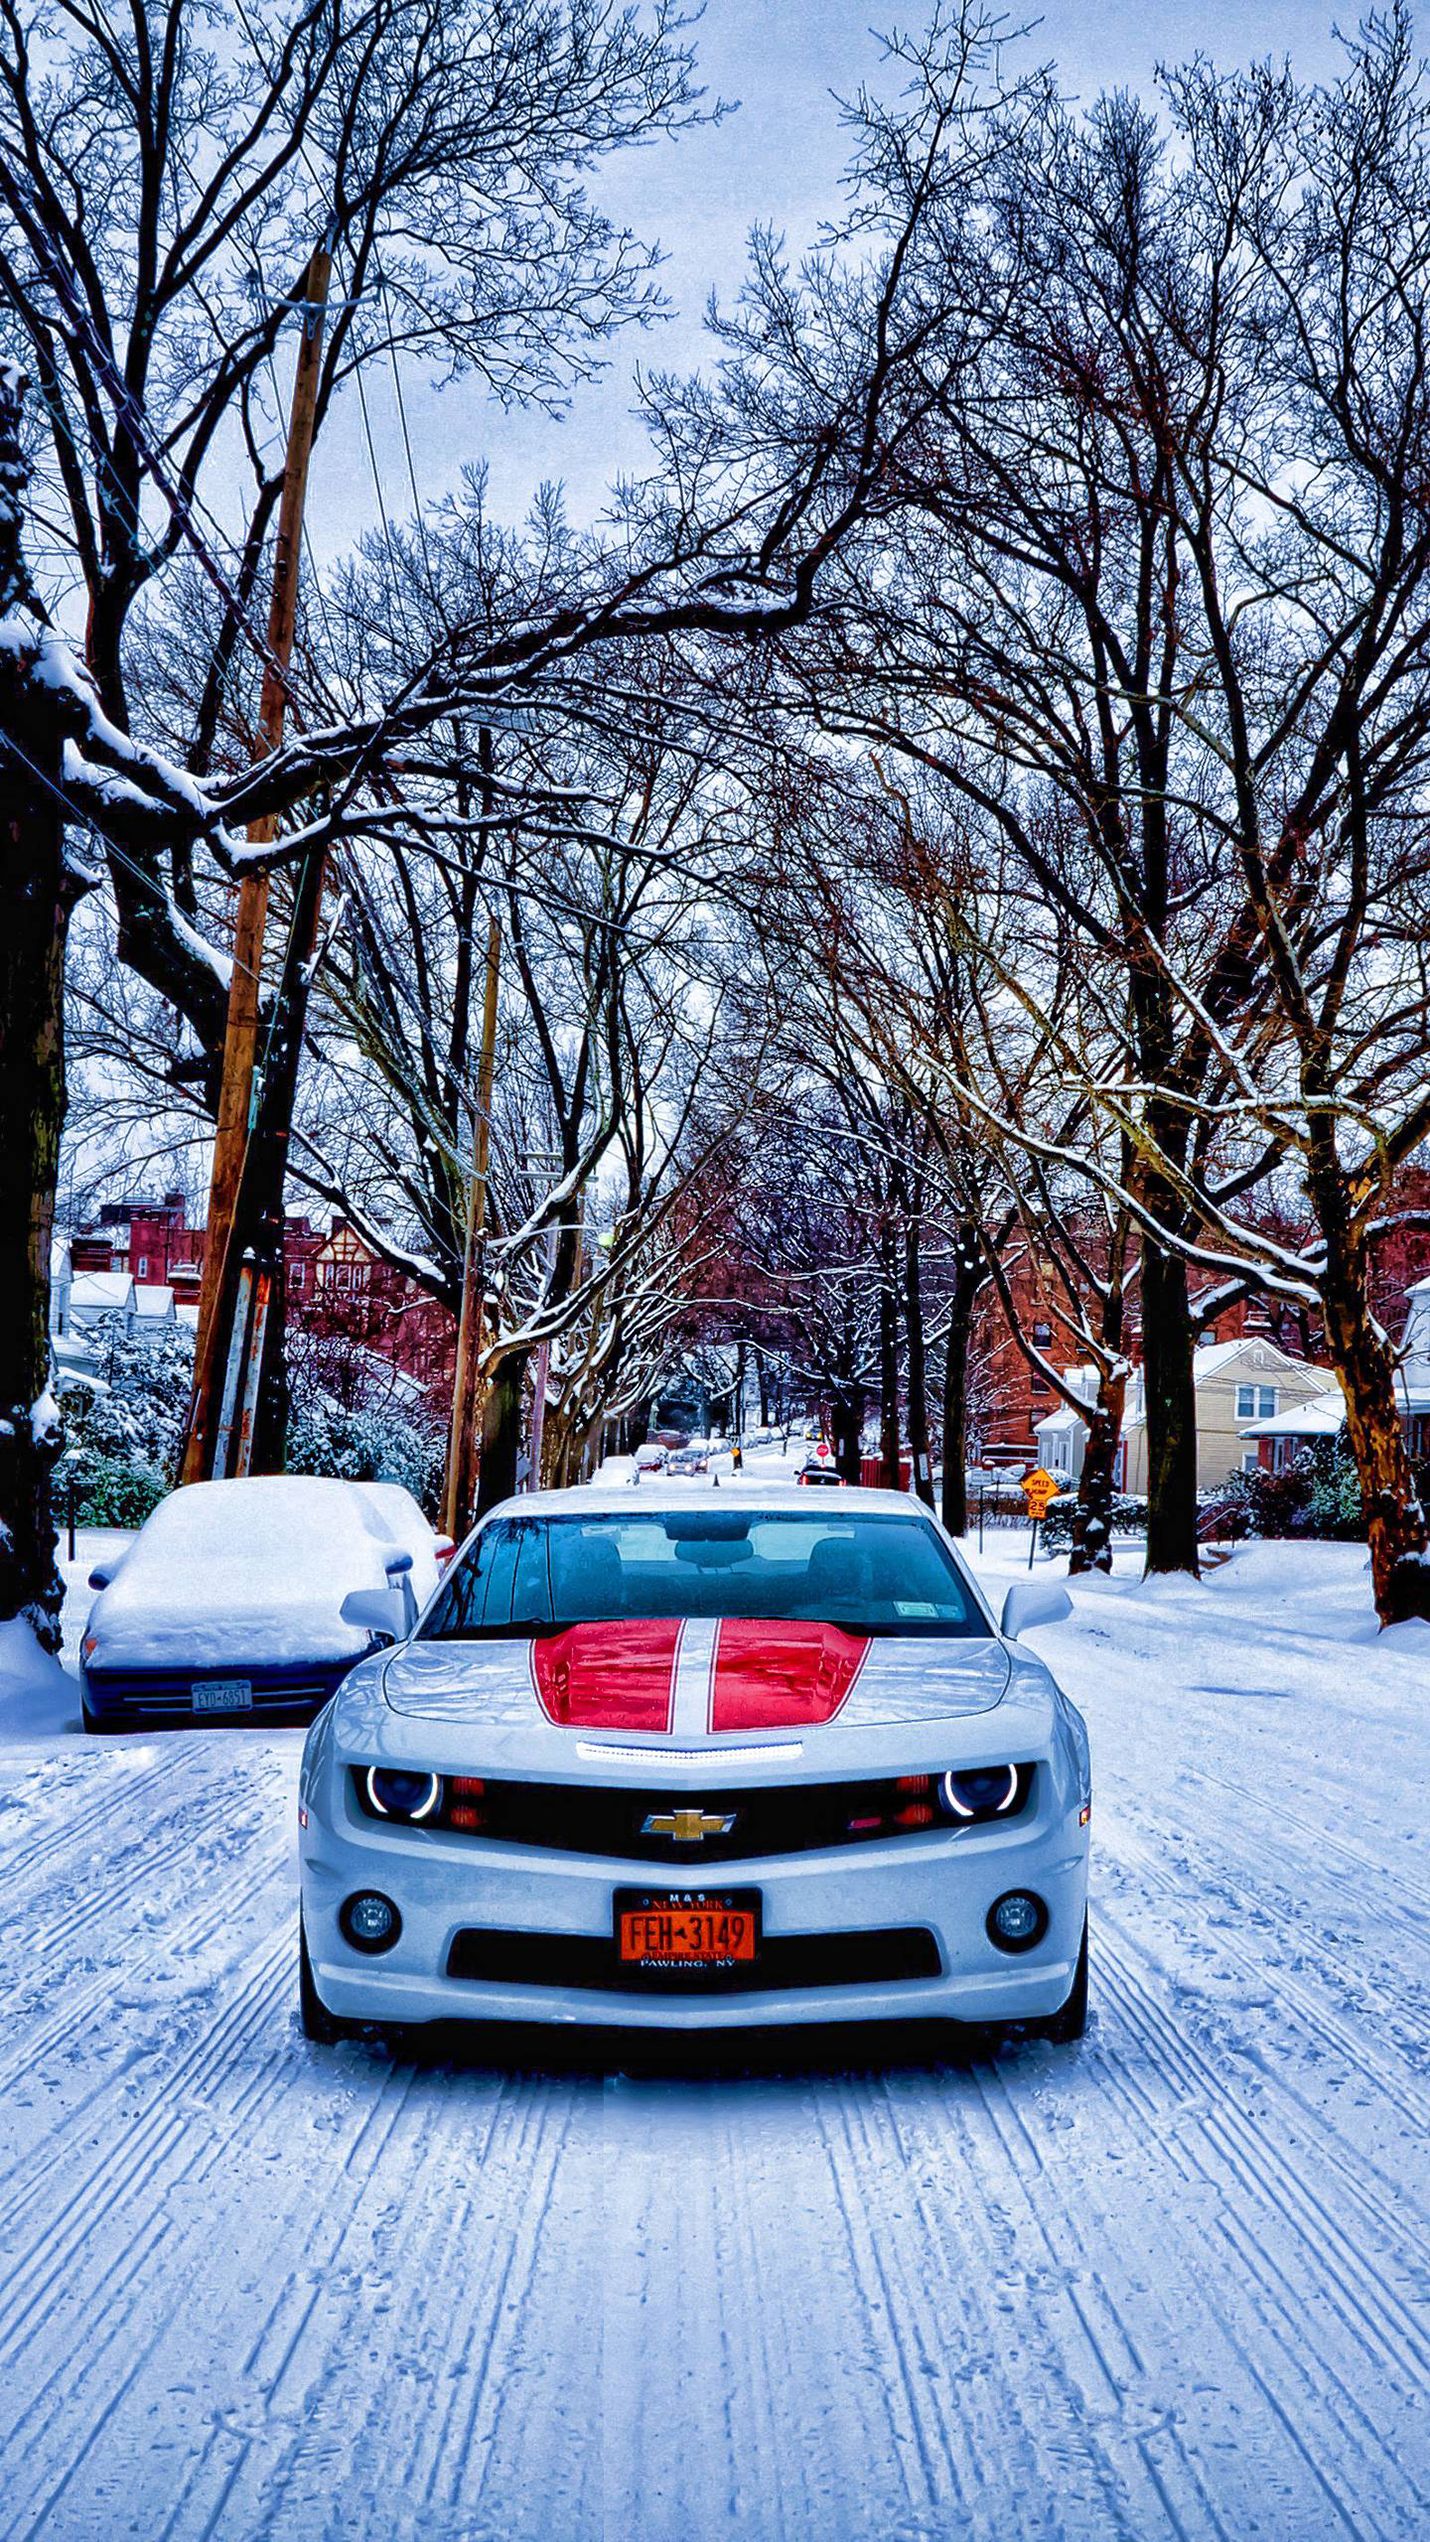 Camaro In Snow HD Wallpaper Download In Link. Car wallpaper